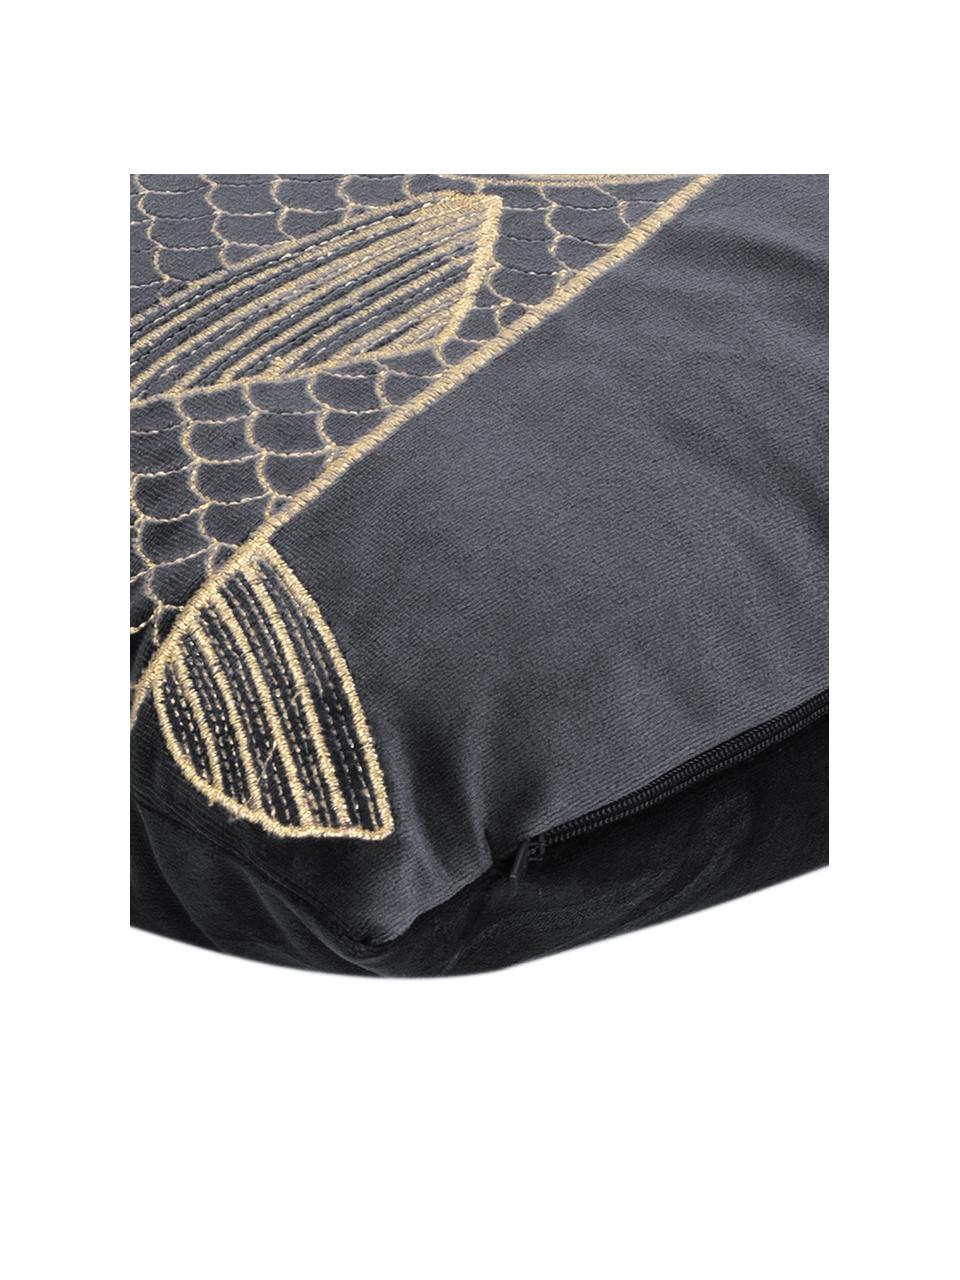 Dunkelgraue Samt-Kissenhülle Caja mit goldener Stickerei, 100% Polyestersamt, Dunkelgrau, 30 x 50 cm